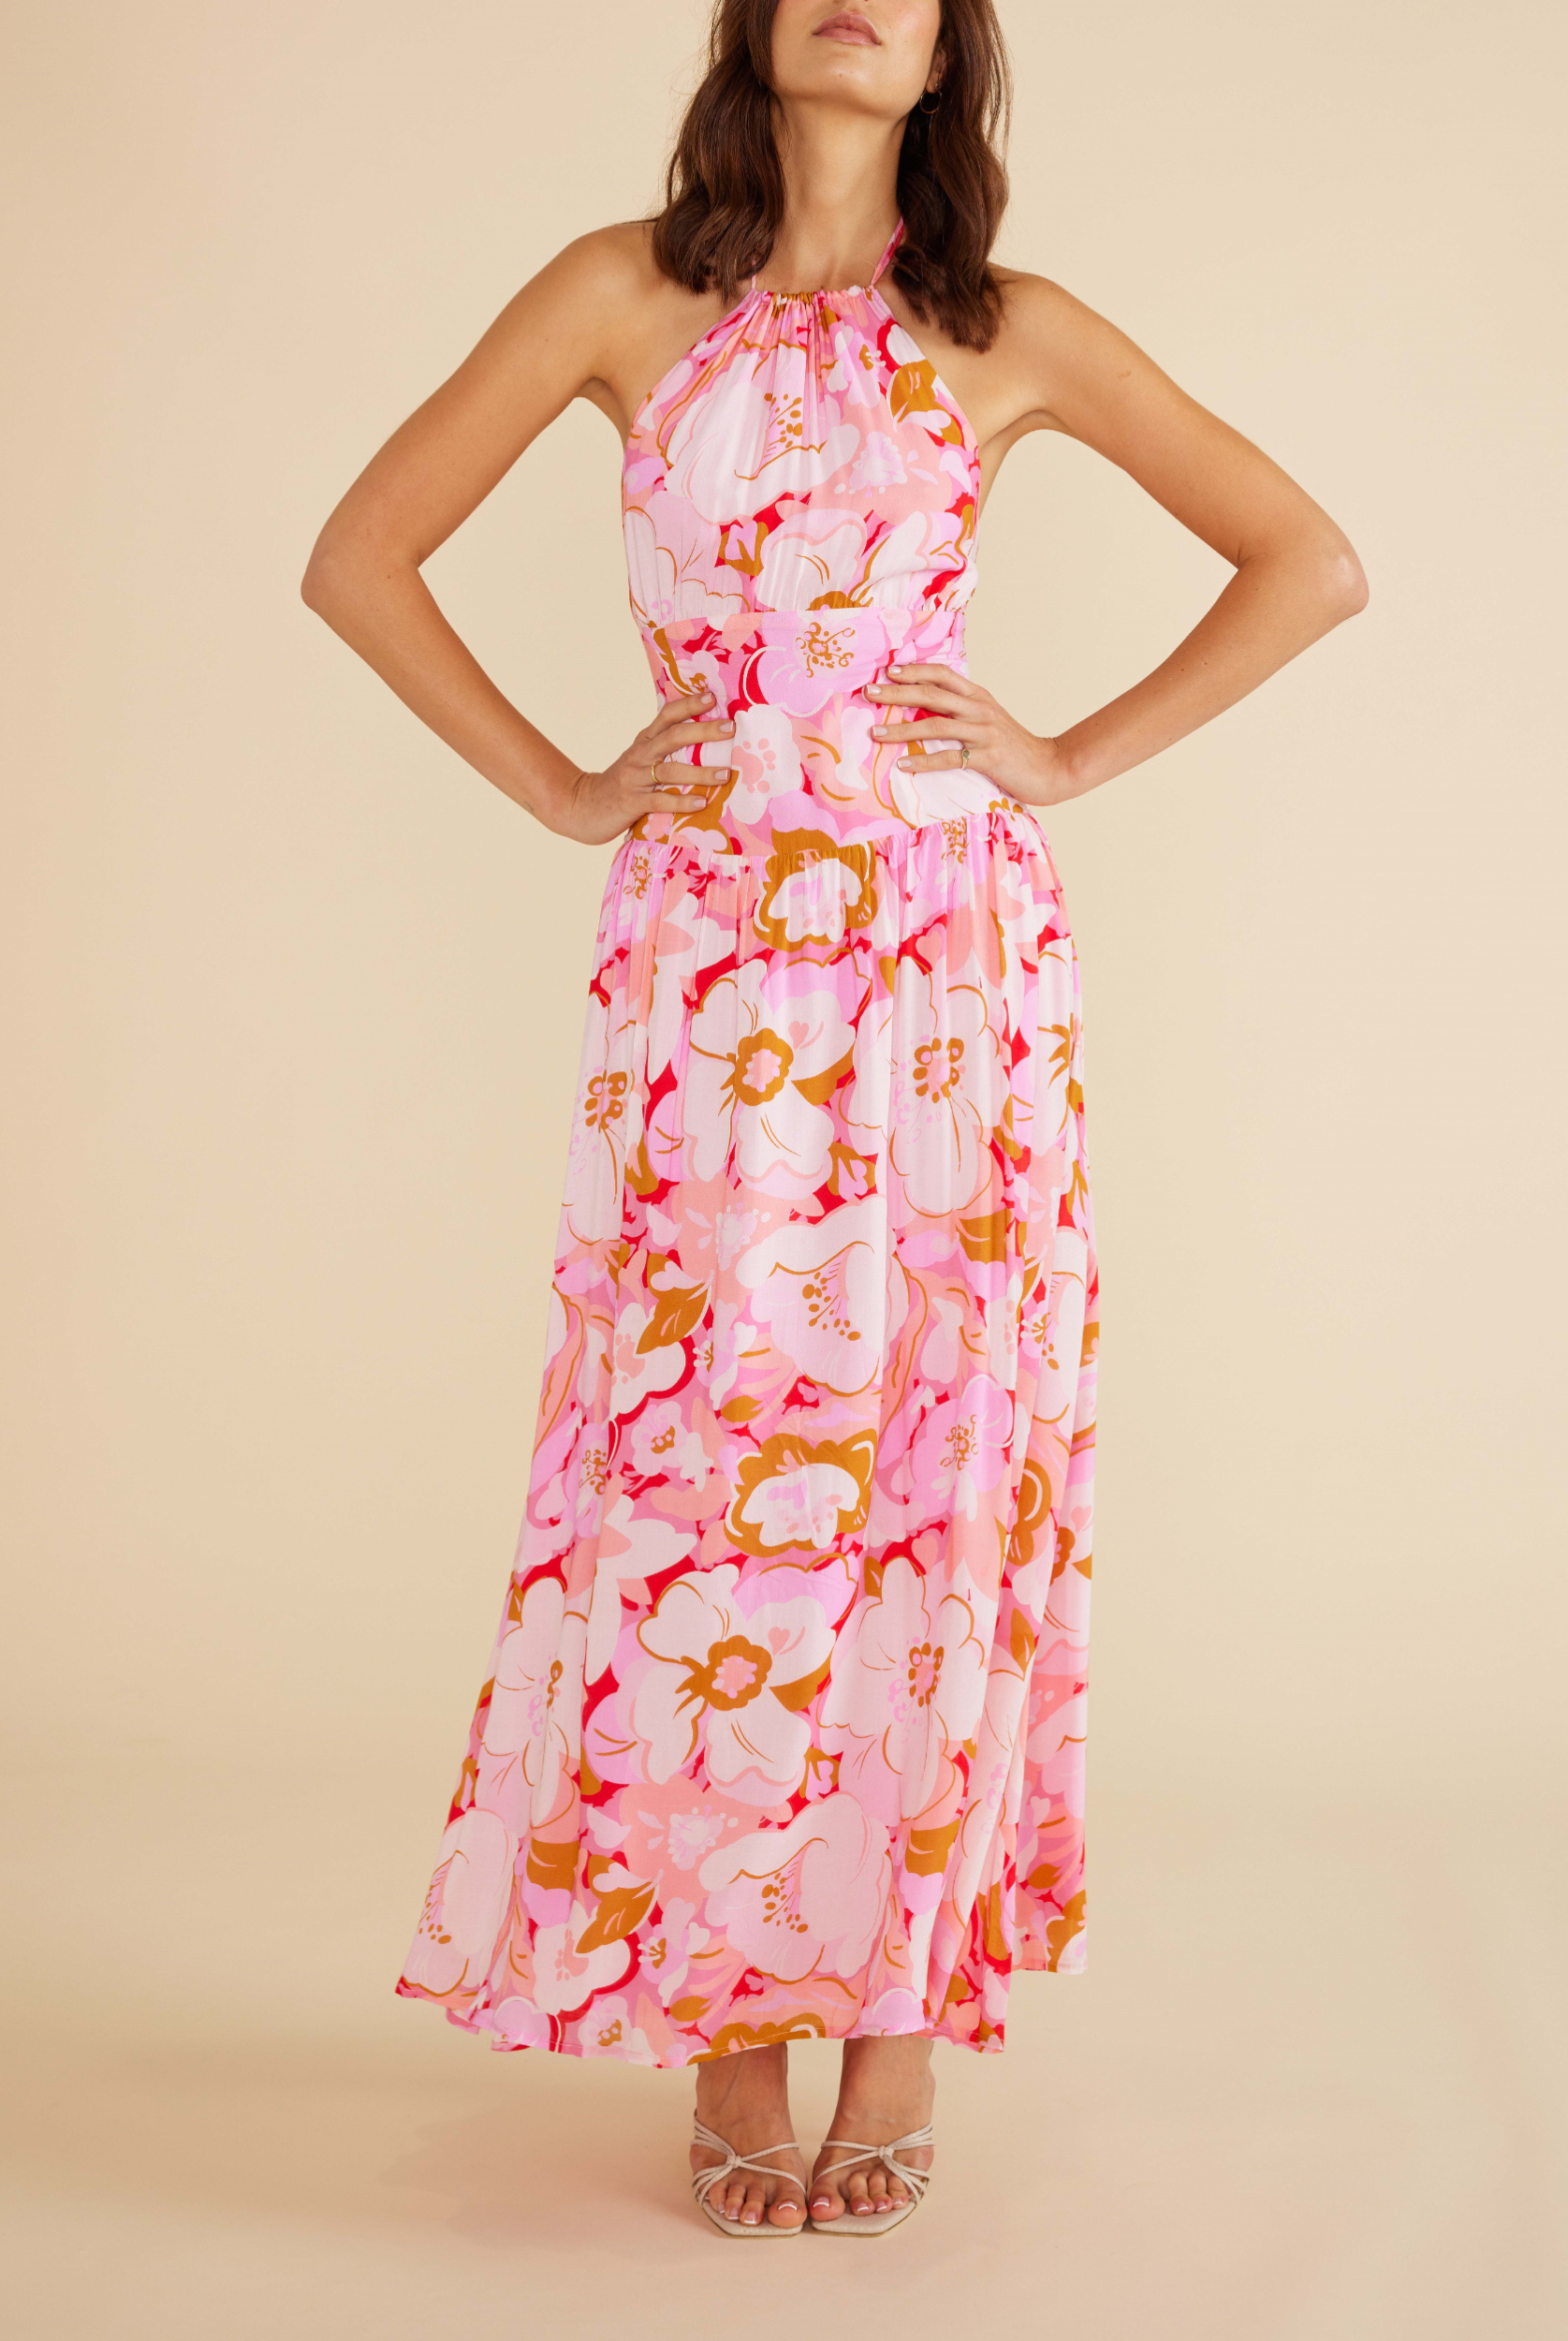 Model wearing the Amina Halterneck dress in floral print